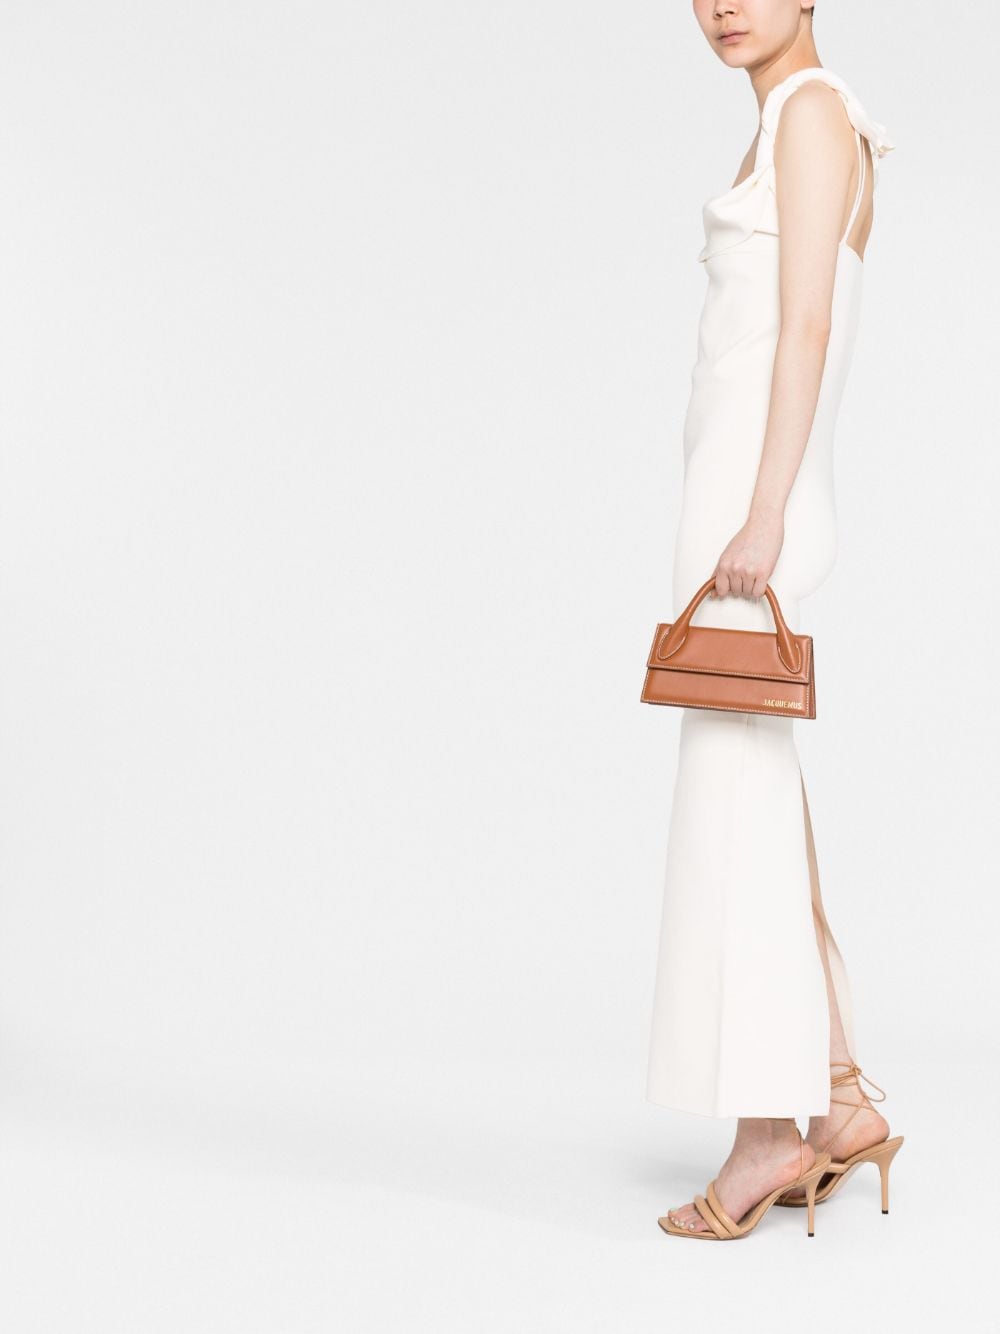 Jacquemus Women's Le Chiquito Long Mini Bag